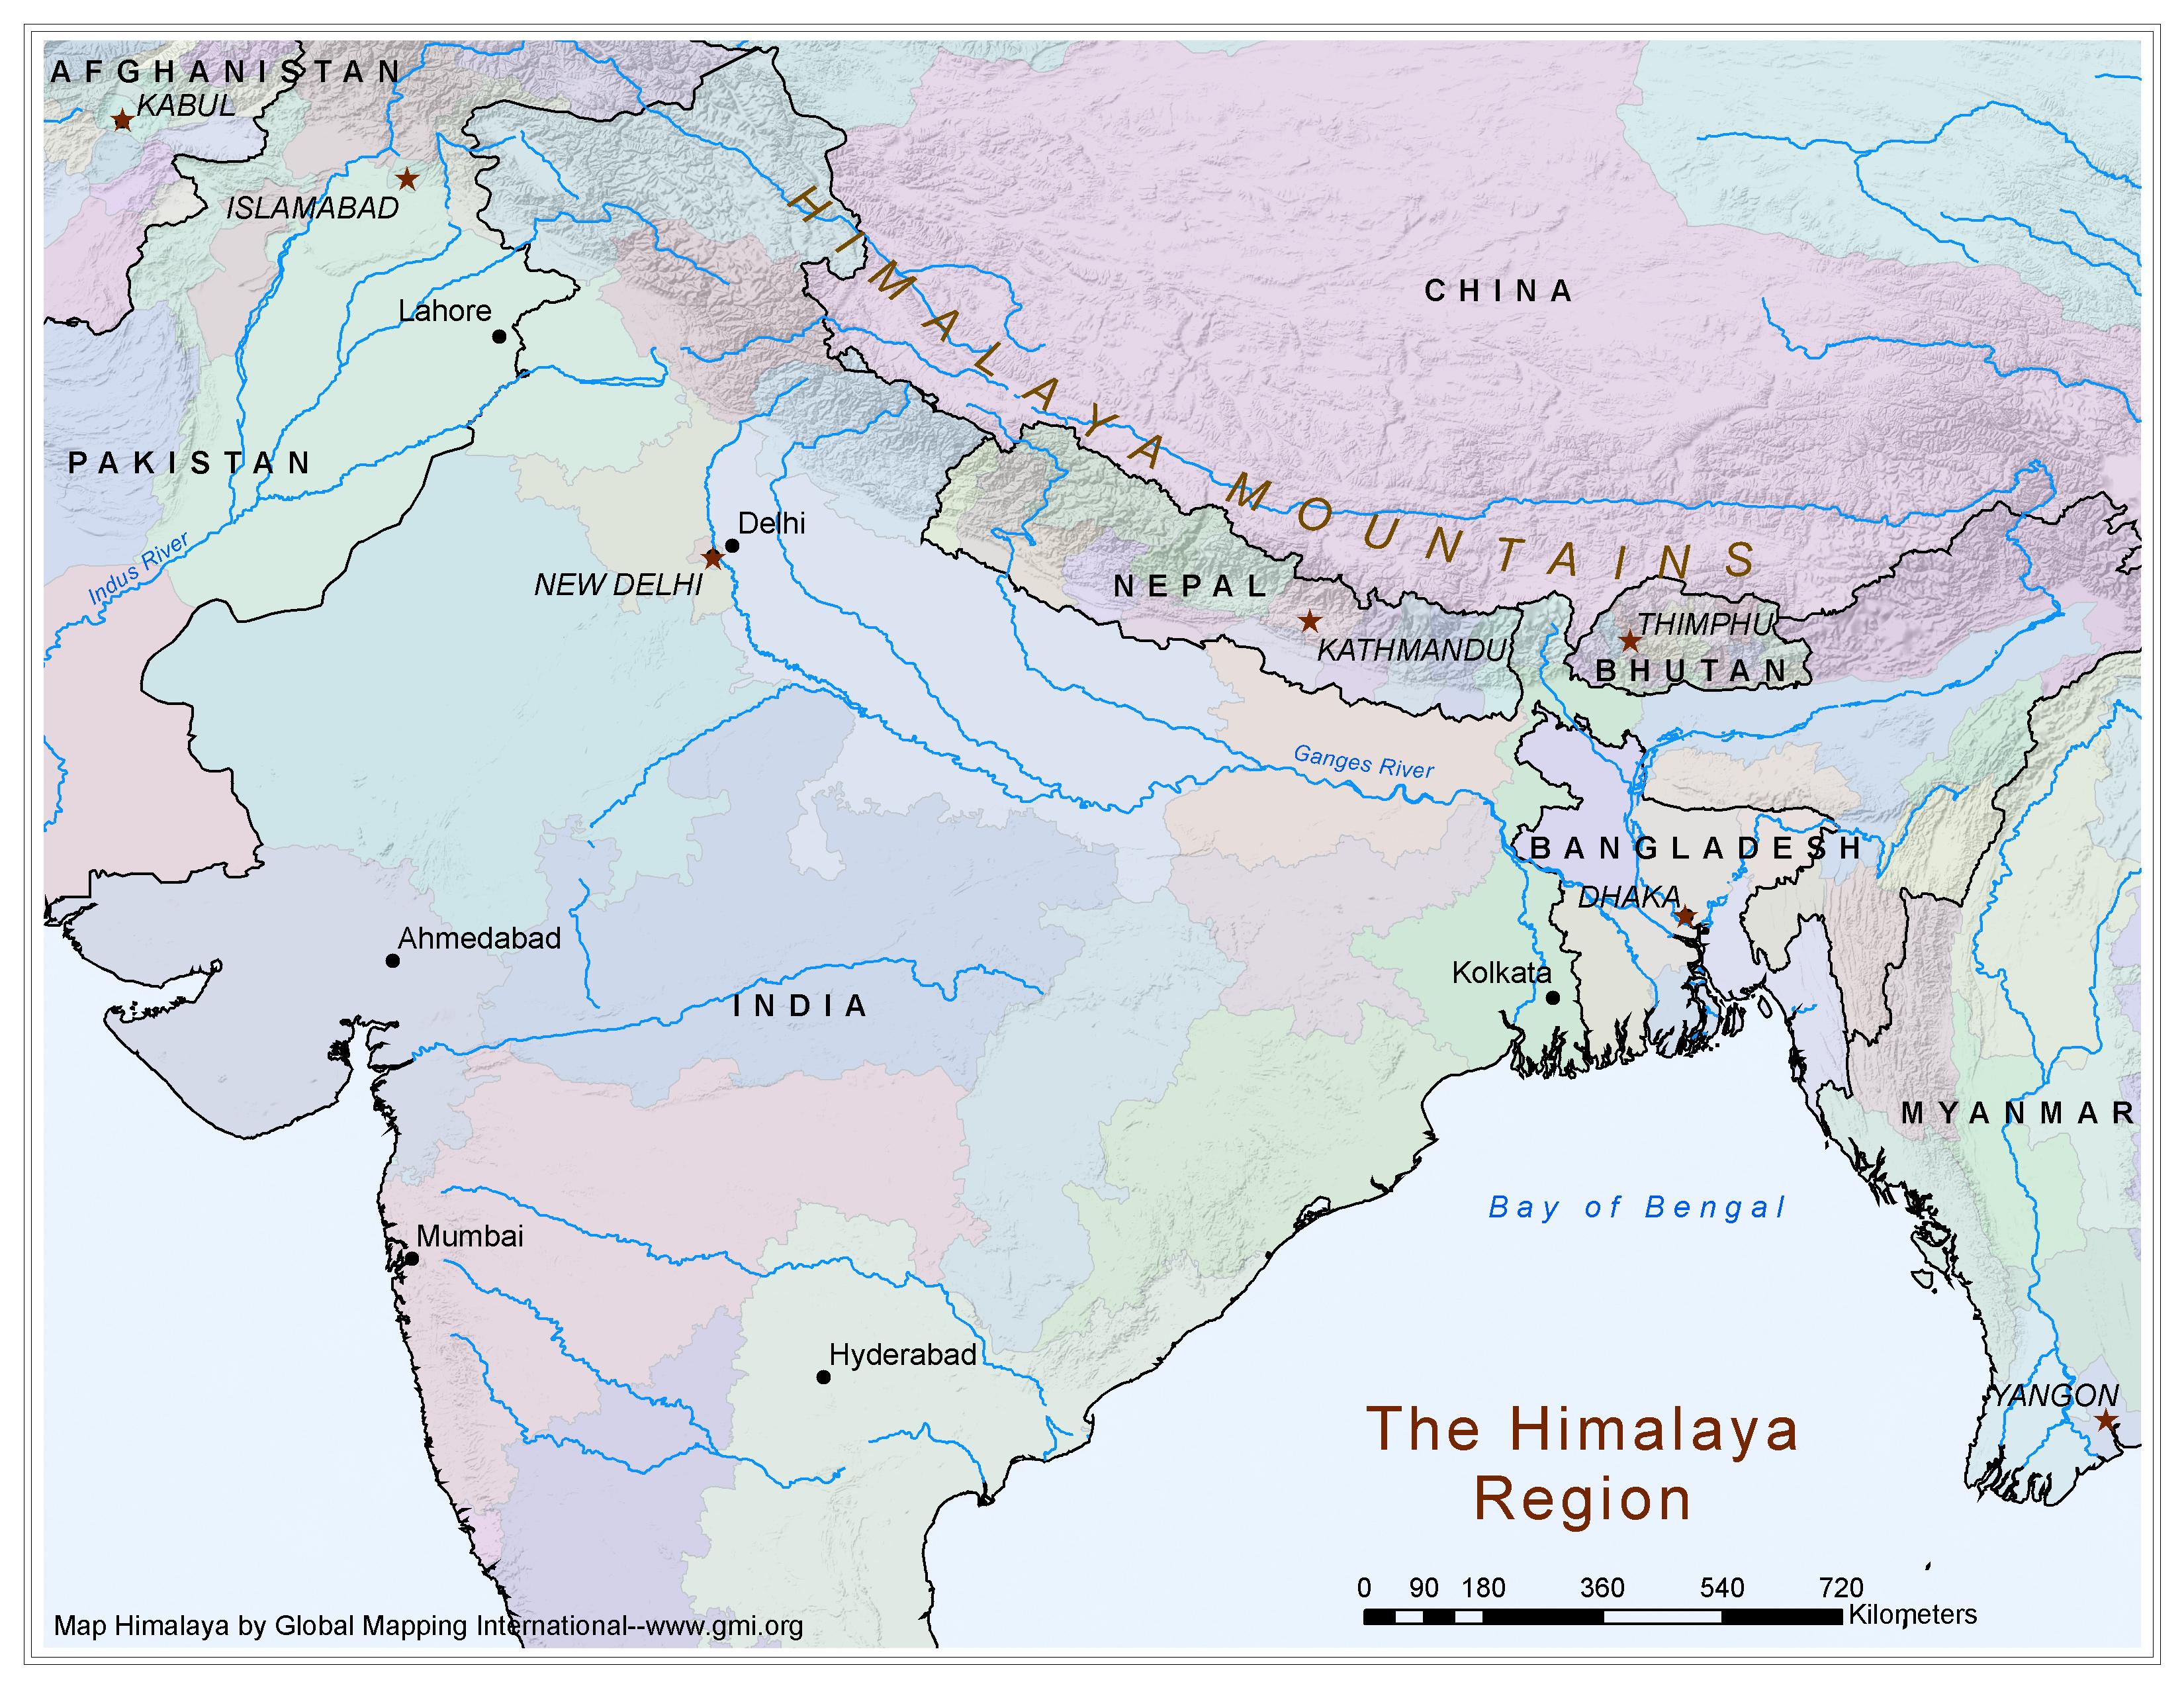 The Himalaya Region